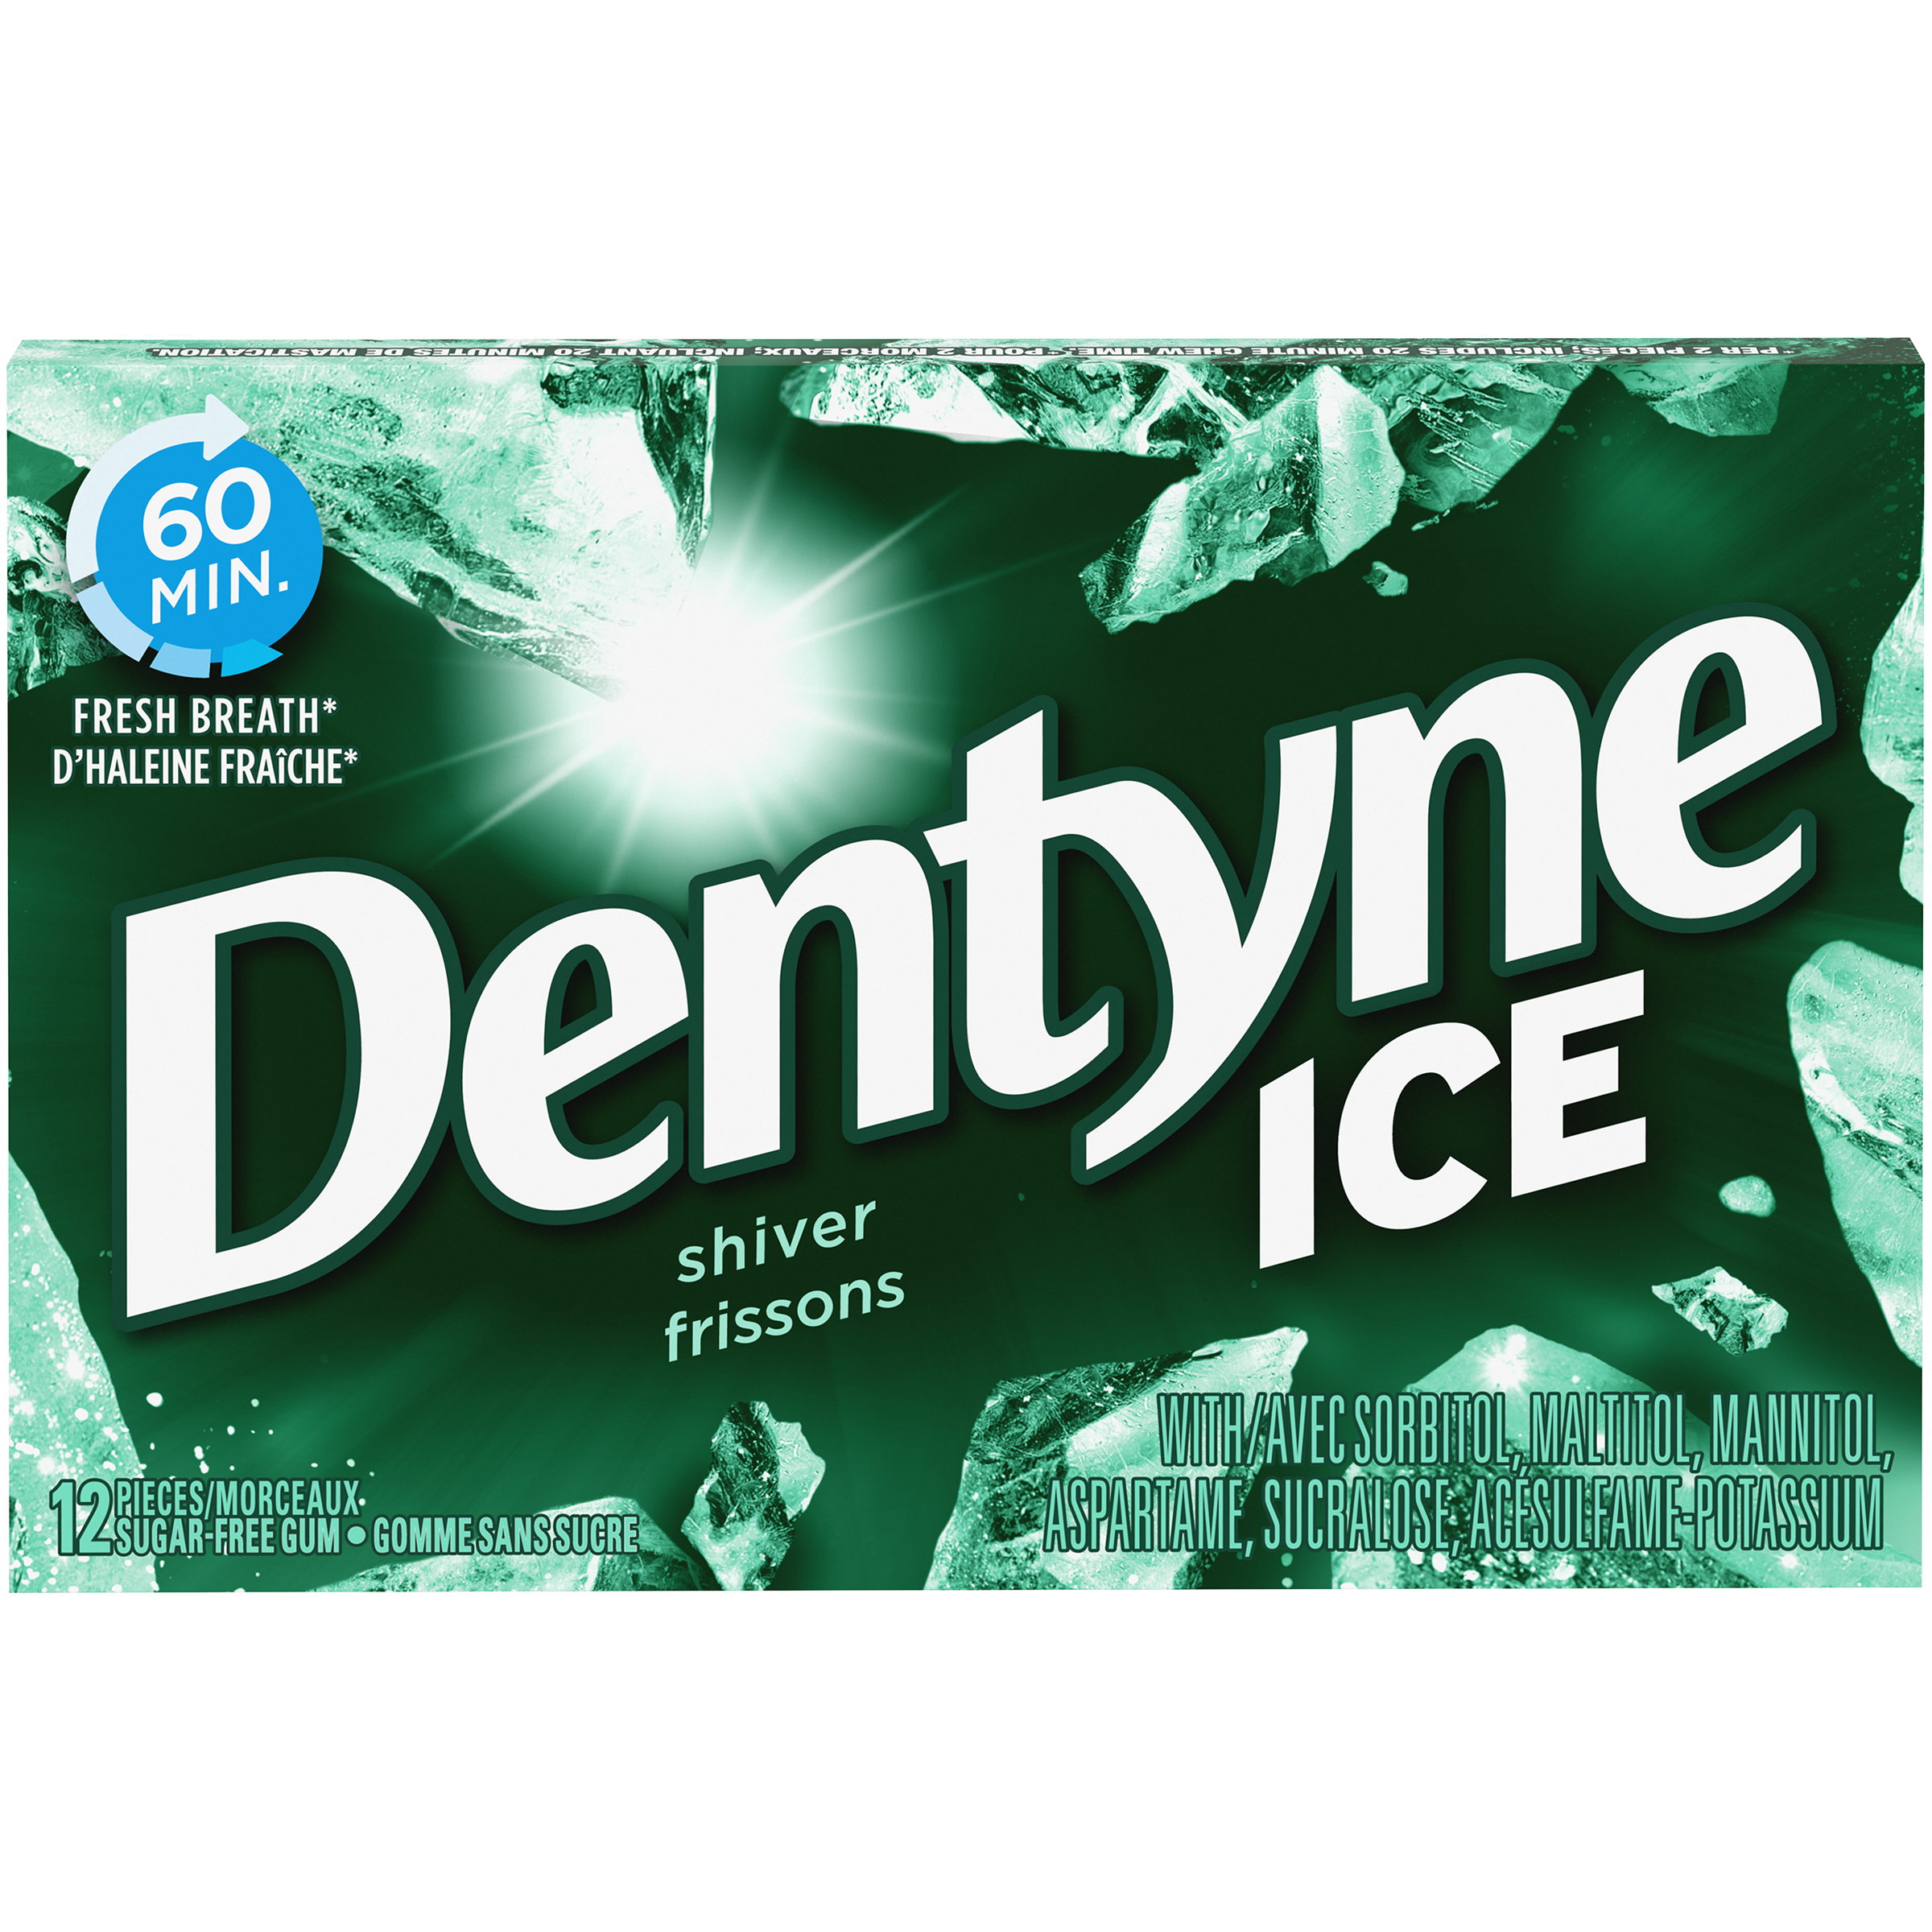 Dentyne Ice Shiver Gum 12 Count